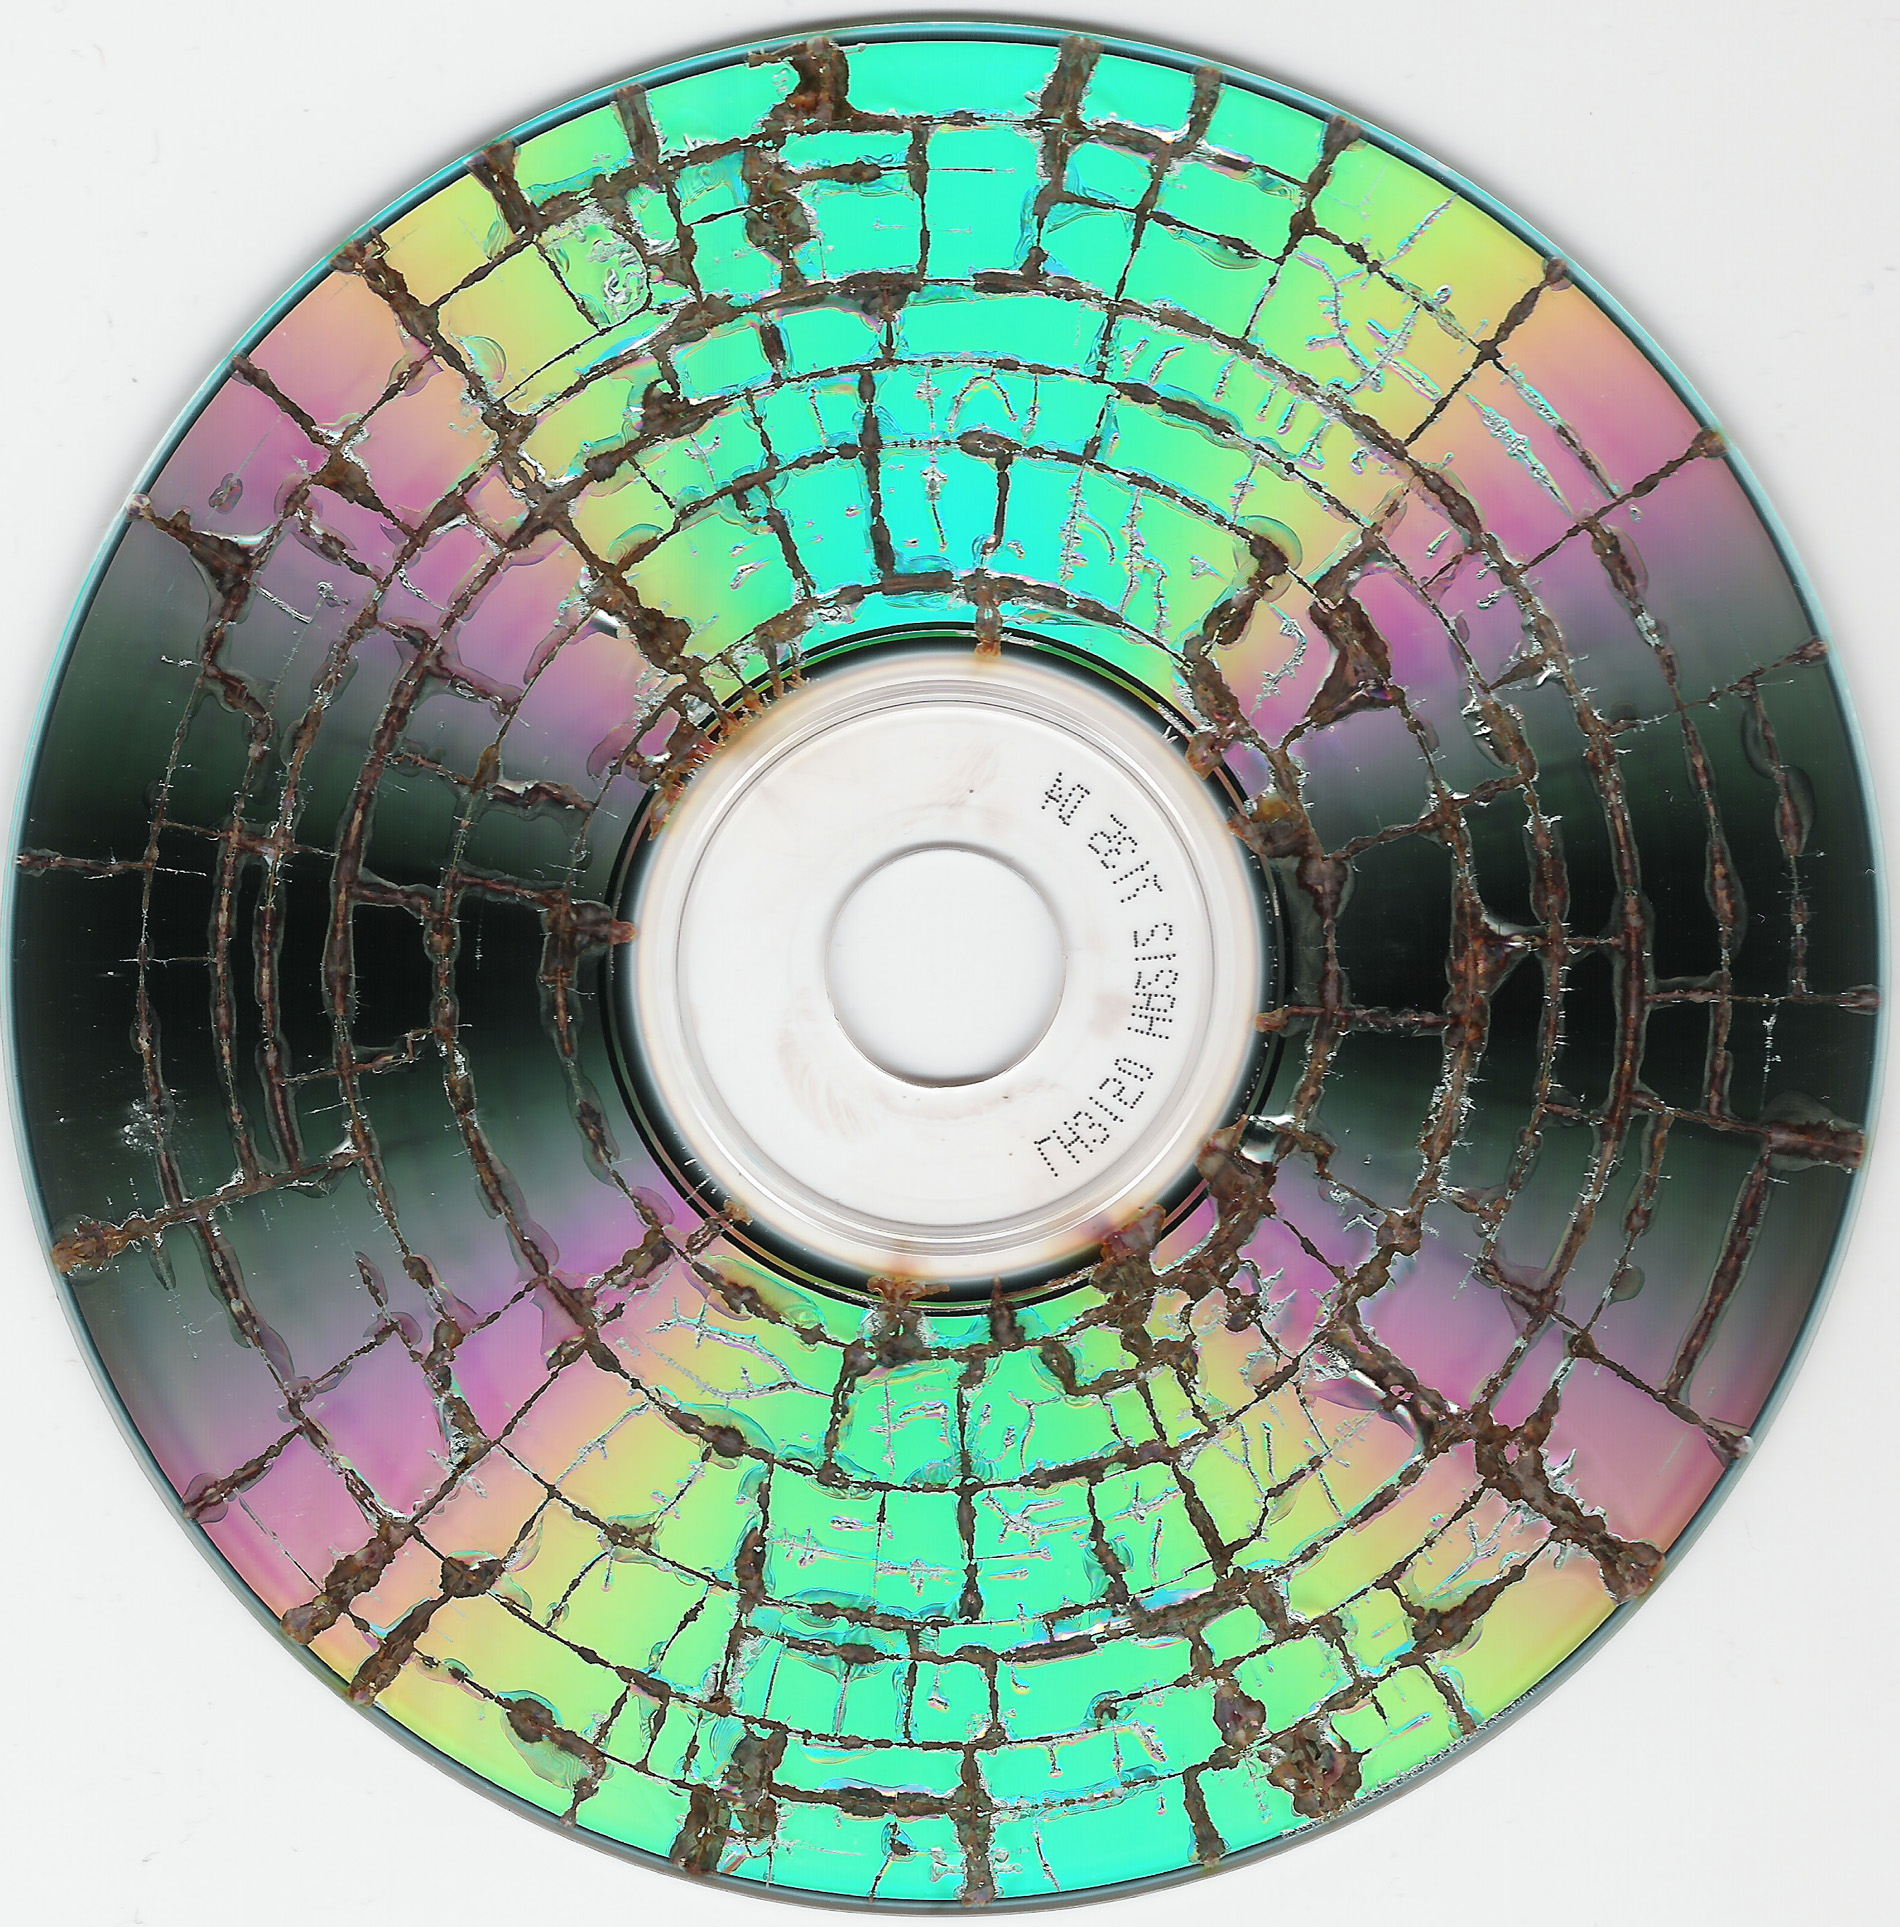 File:Microwaved-CD.jpg - Wikipedia